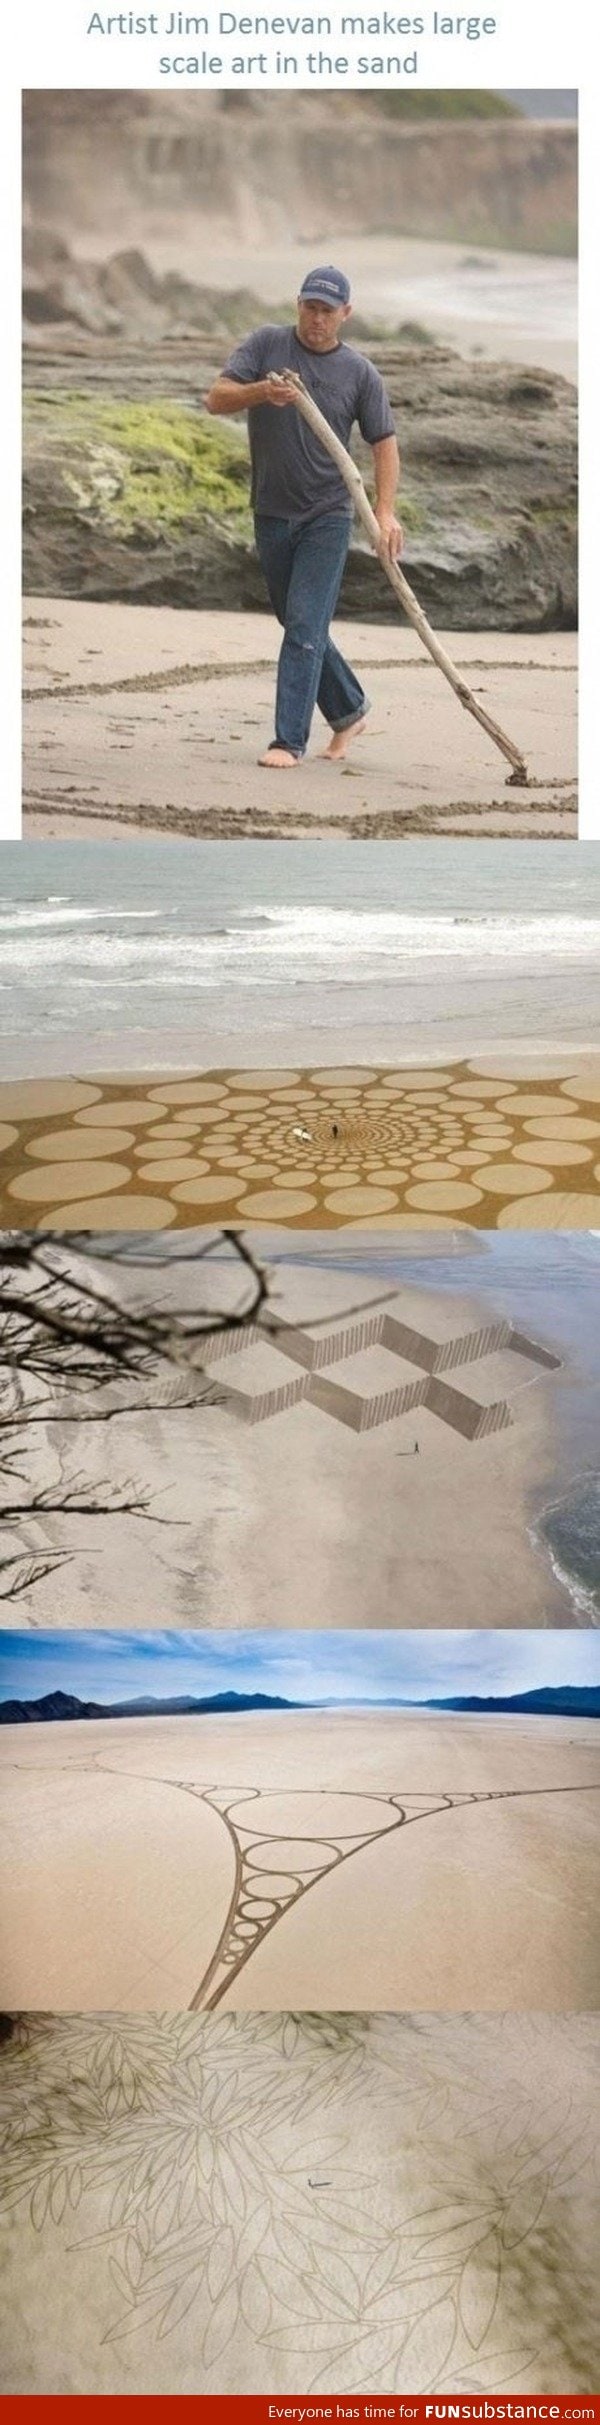 Large scale sand art